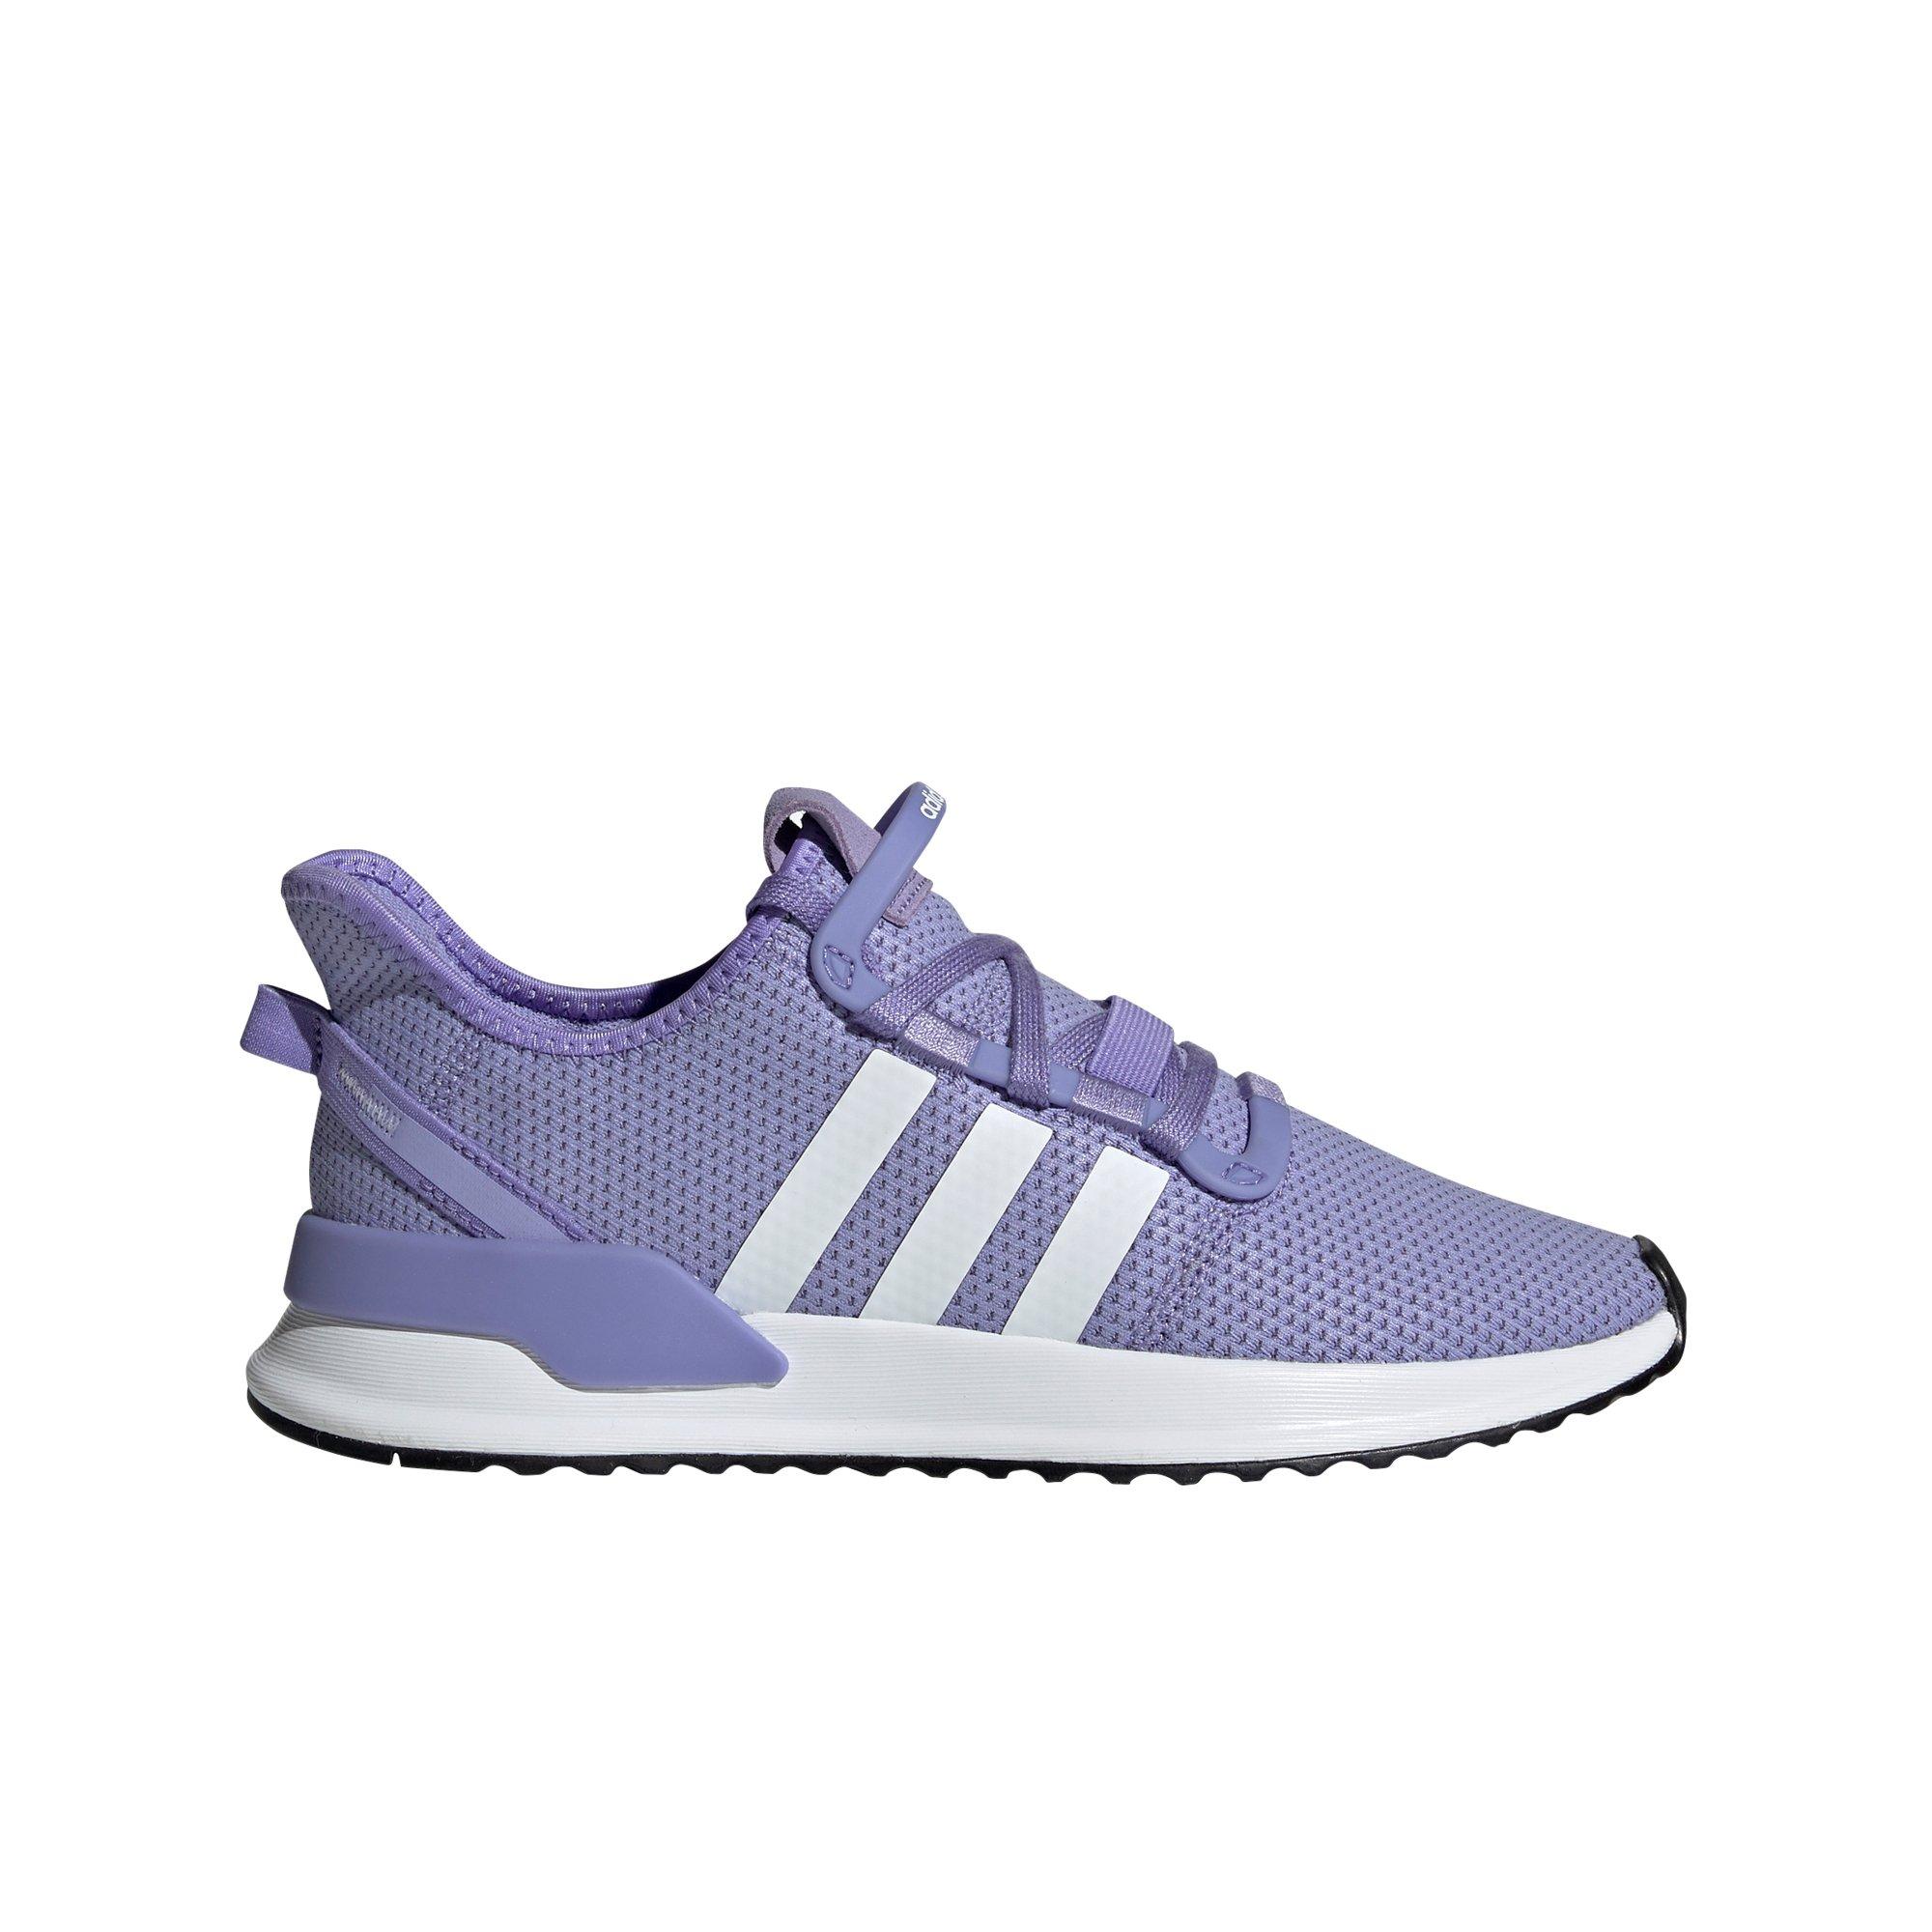 adidas light purple shoes